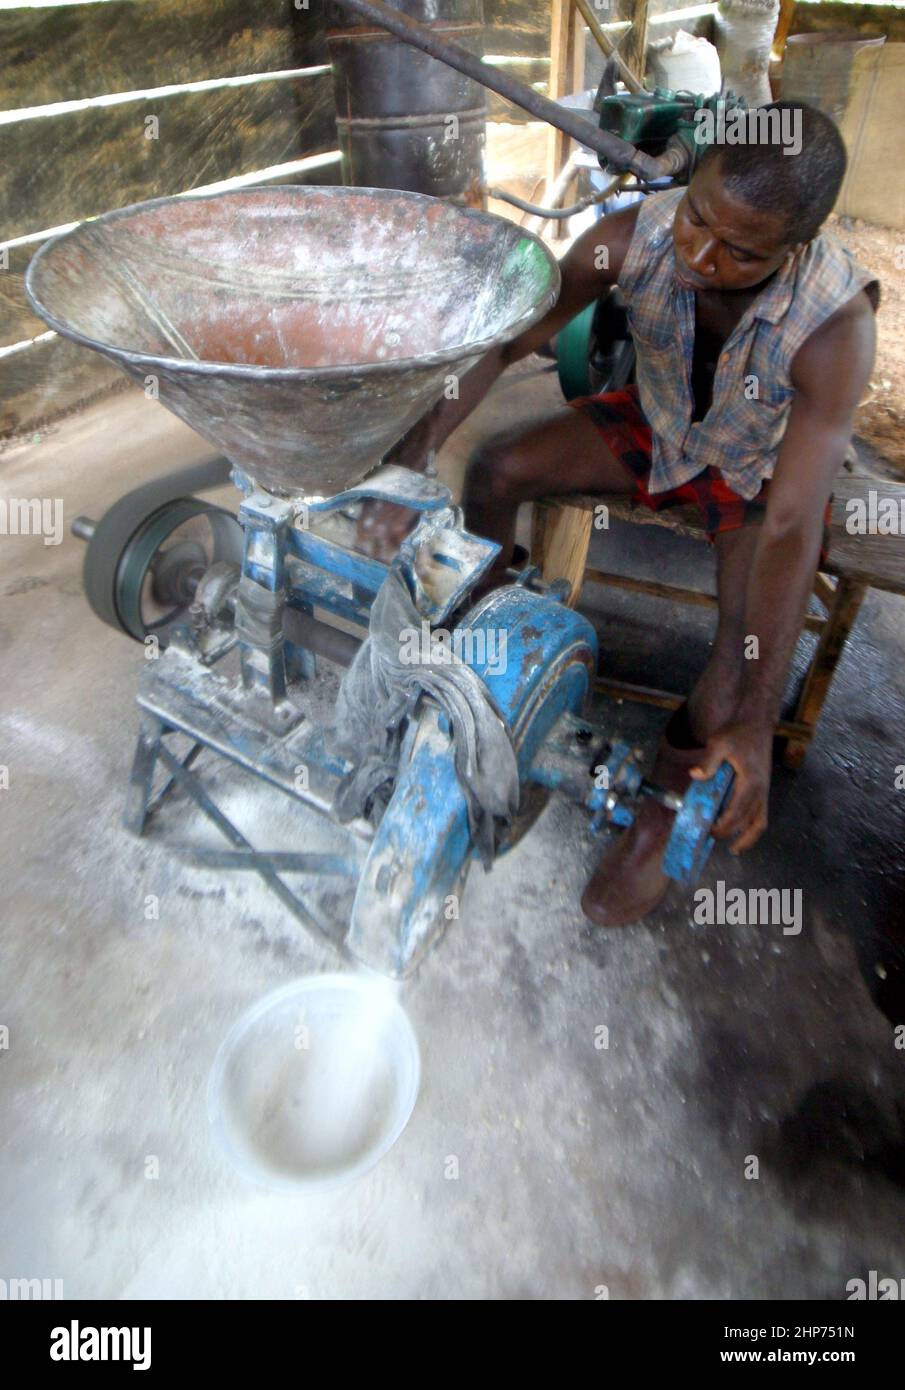 Uomo mulini mais per fare Ugali. Ugali è un tipo di porridge di mais mangiato nell'Africa orientale e centrale. Ghana Africa occidentale. Immagine GaryRoberts/worldwidefeatures.com Foto Stock